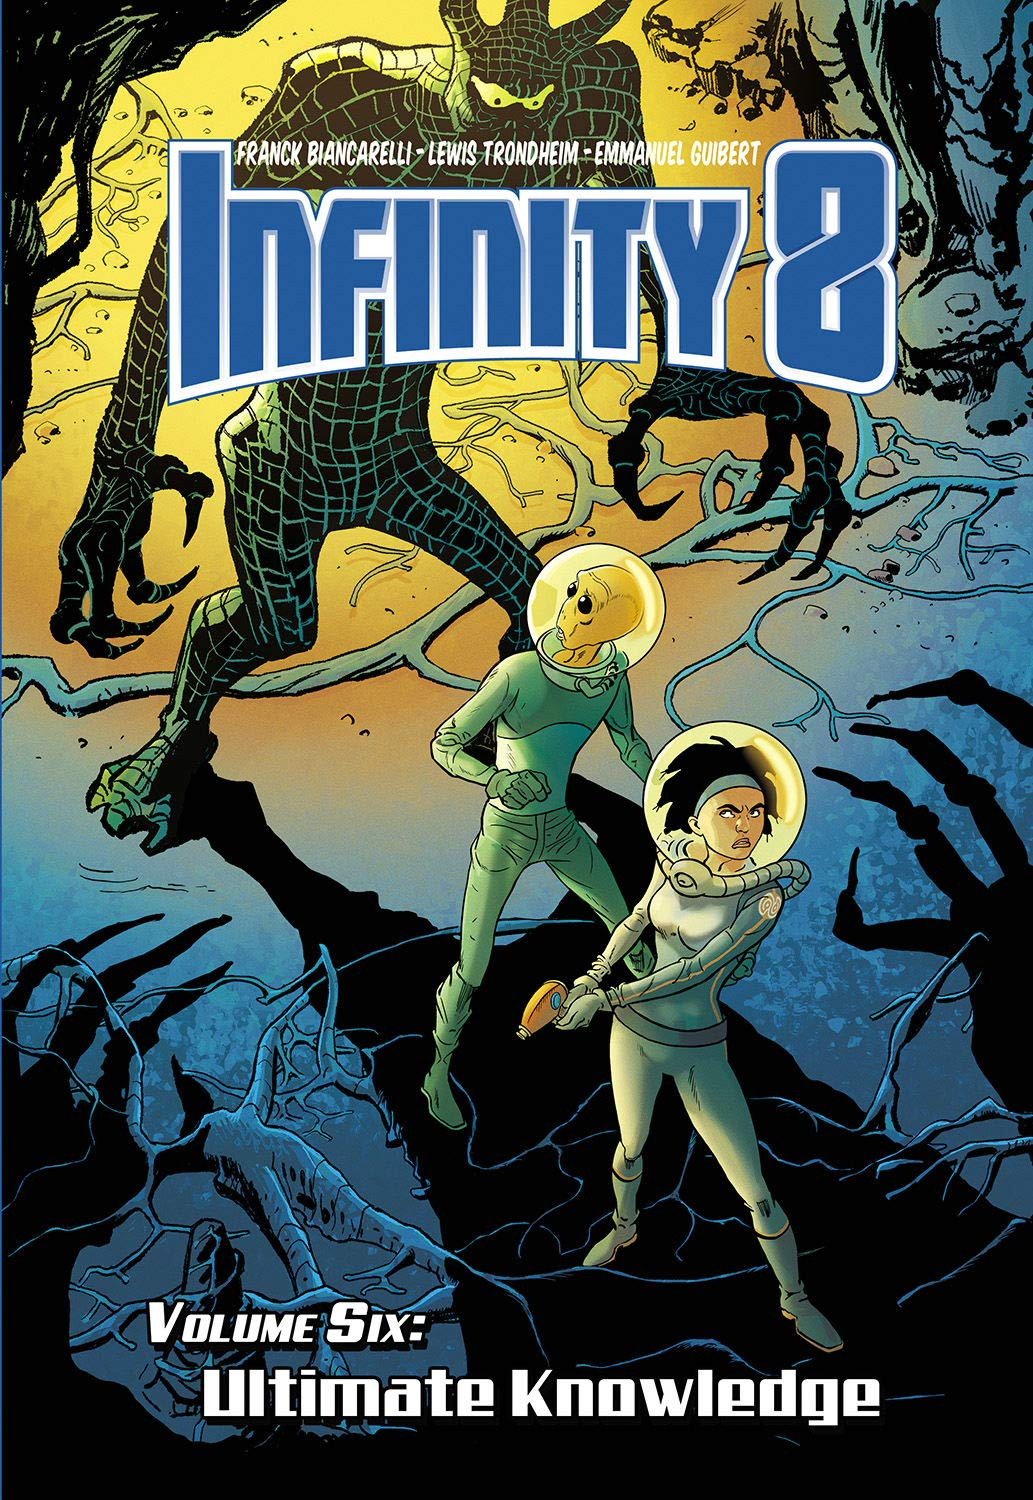 Infinity 8 Vol. 6 - Ultimate Knowledge